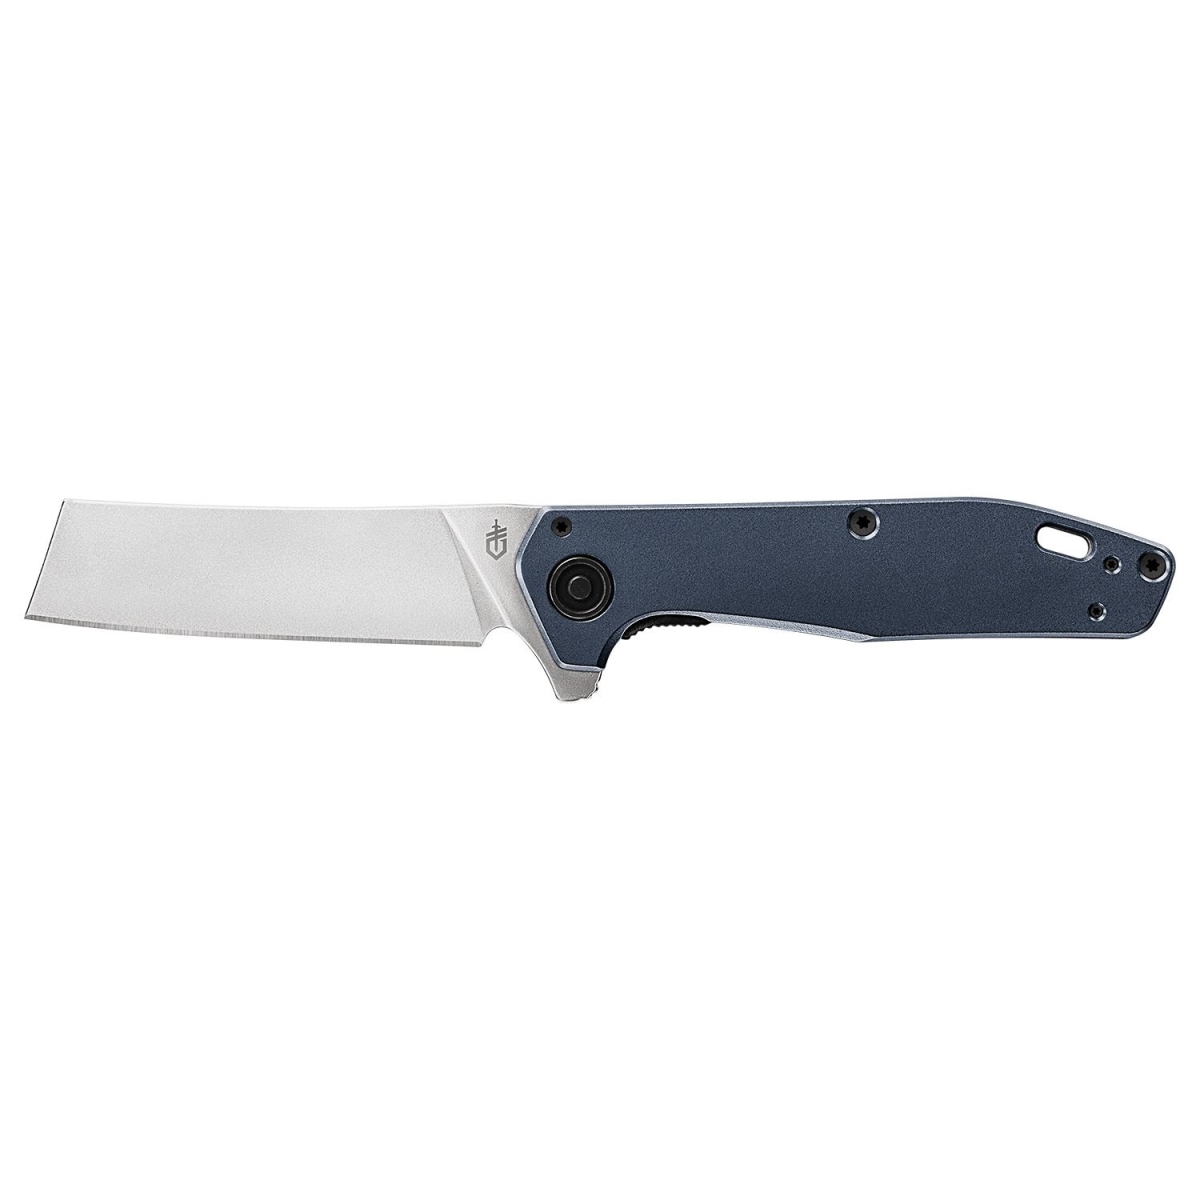 GB-30-001837 Fastball Liner Lock Knife Cleaver, Urban Blue -  Gerber Gear